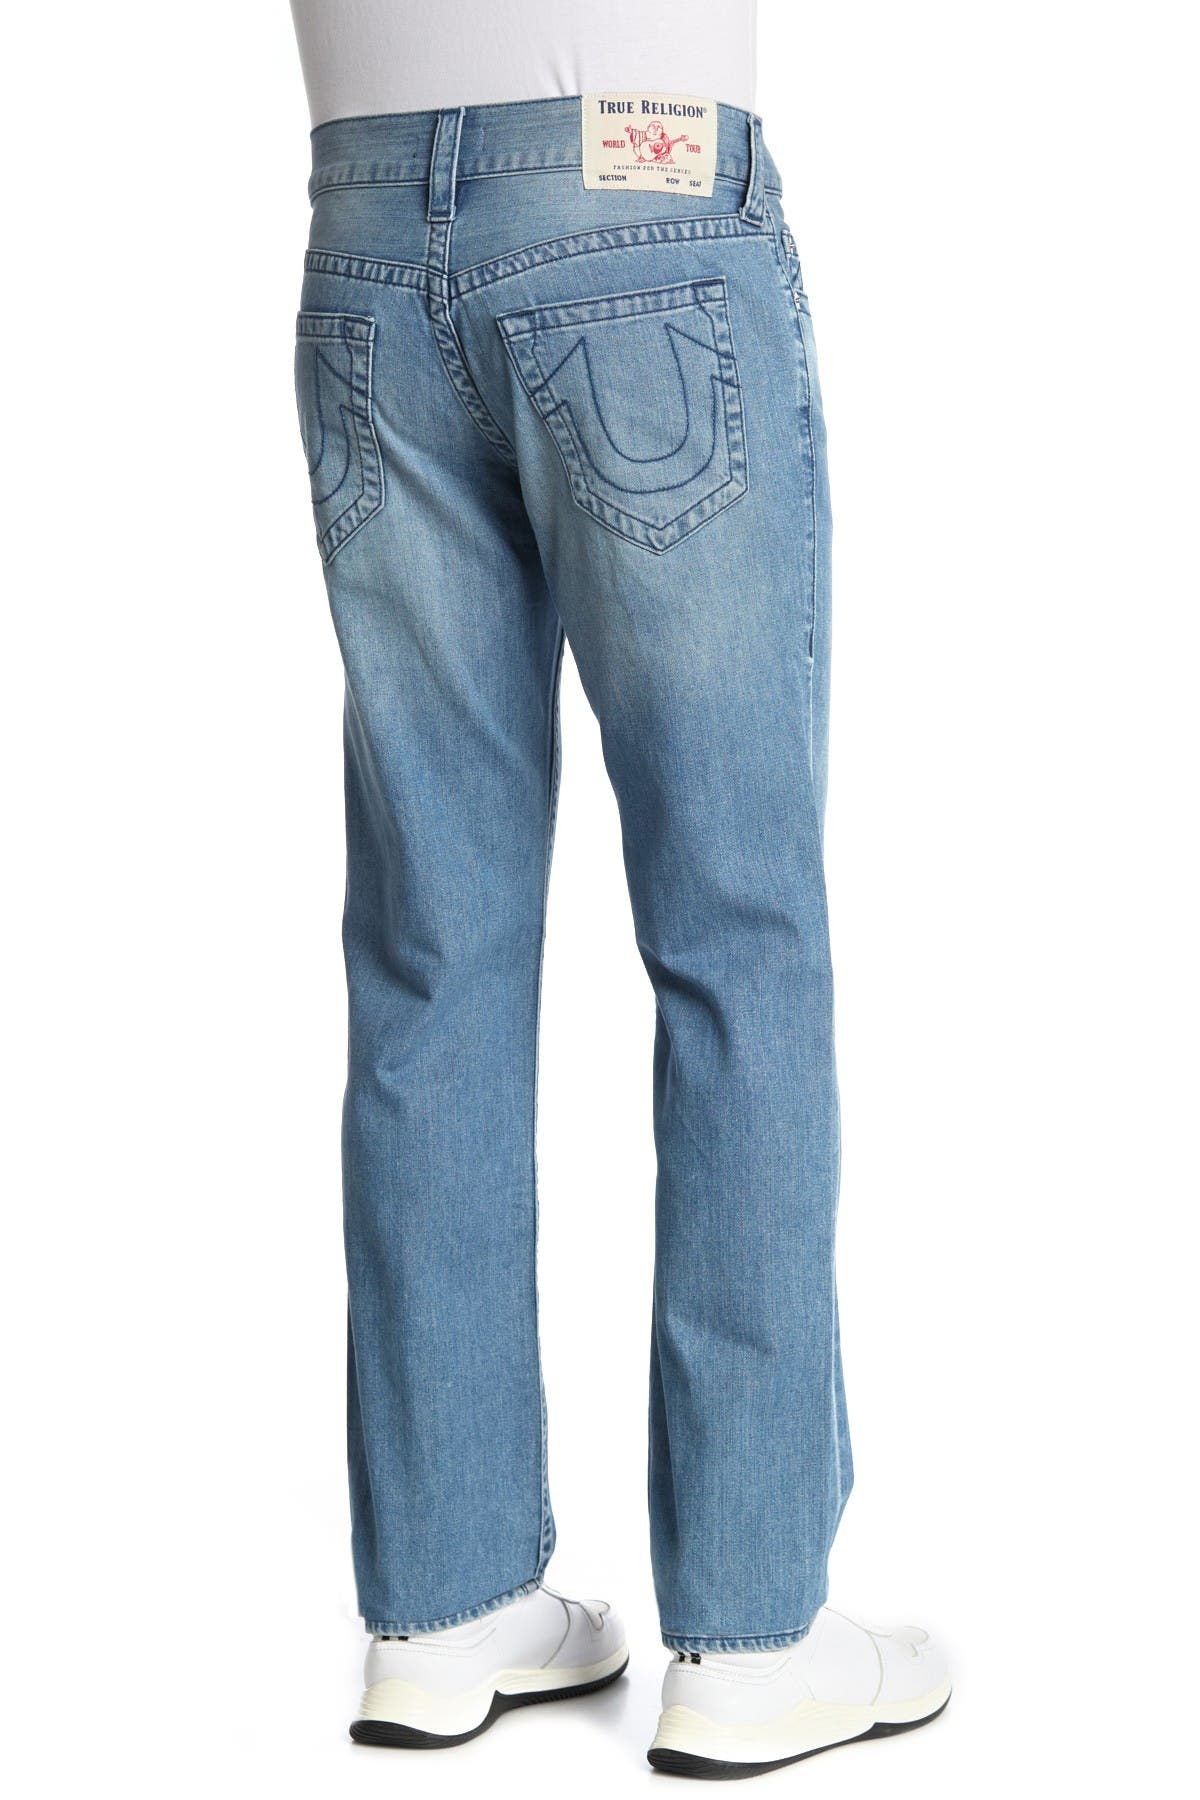 true religion slim fit jeans